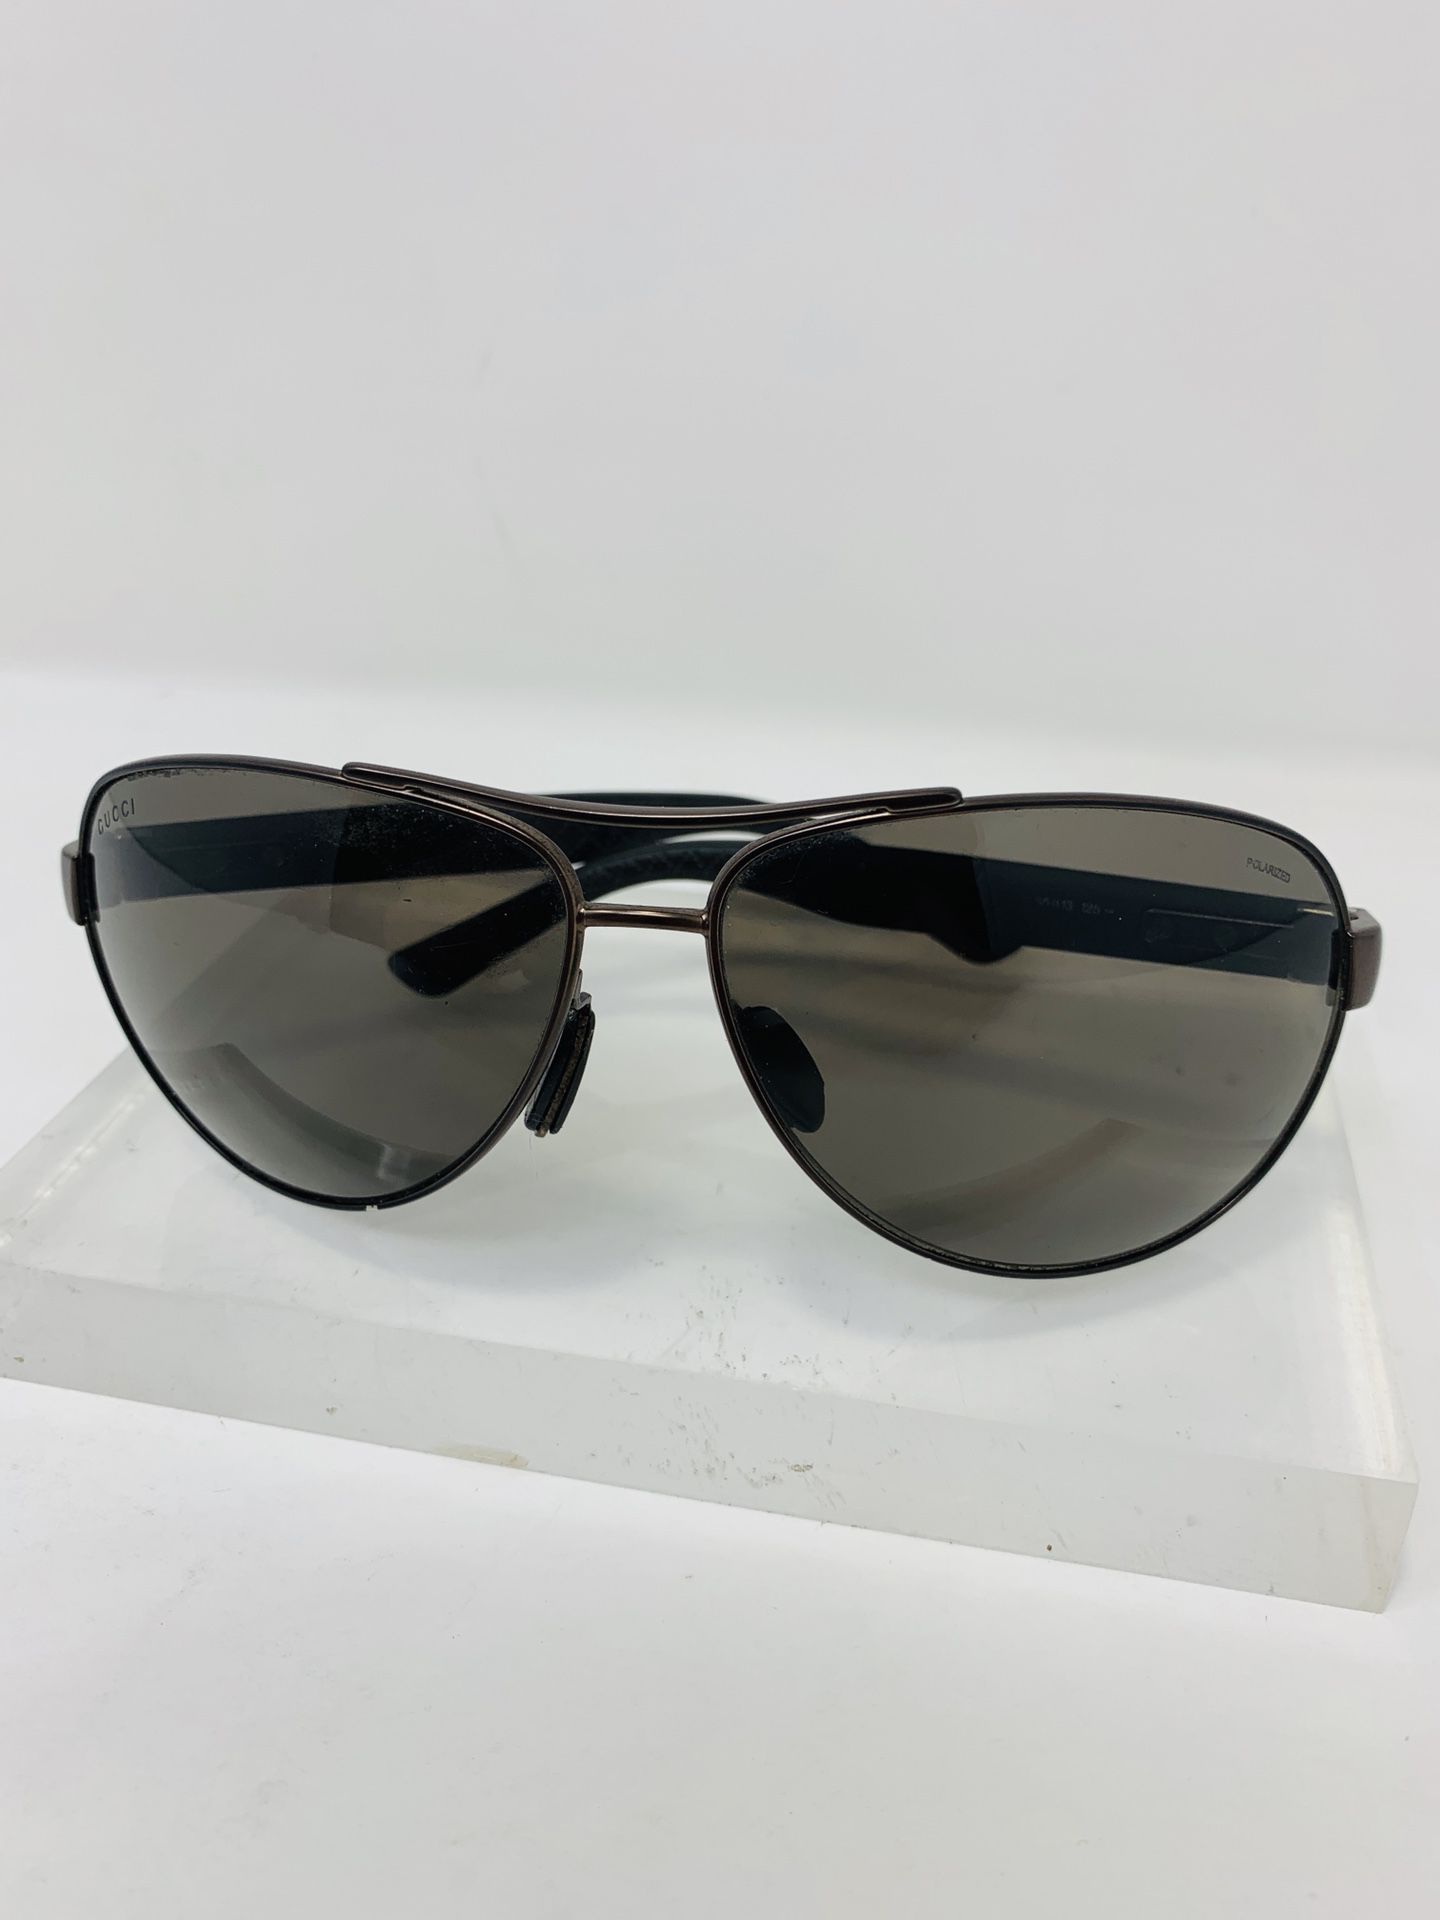 Gucci Sunglasses Black Frame | Grey Polarized Lens